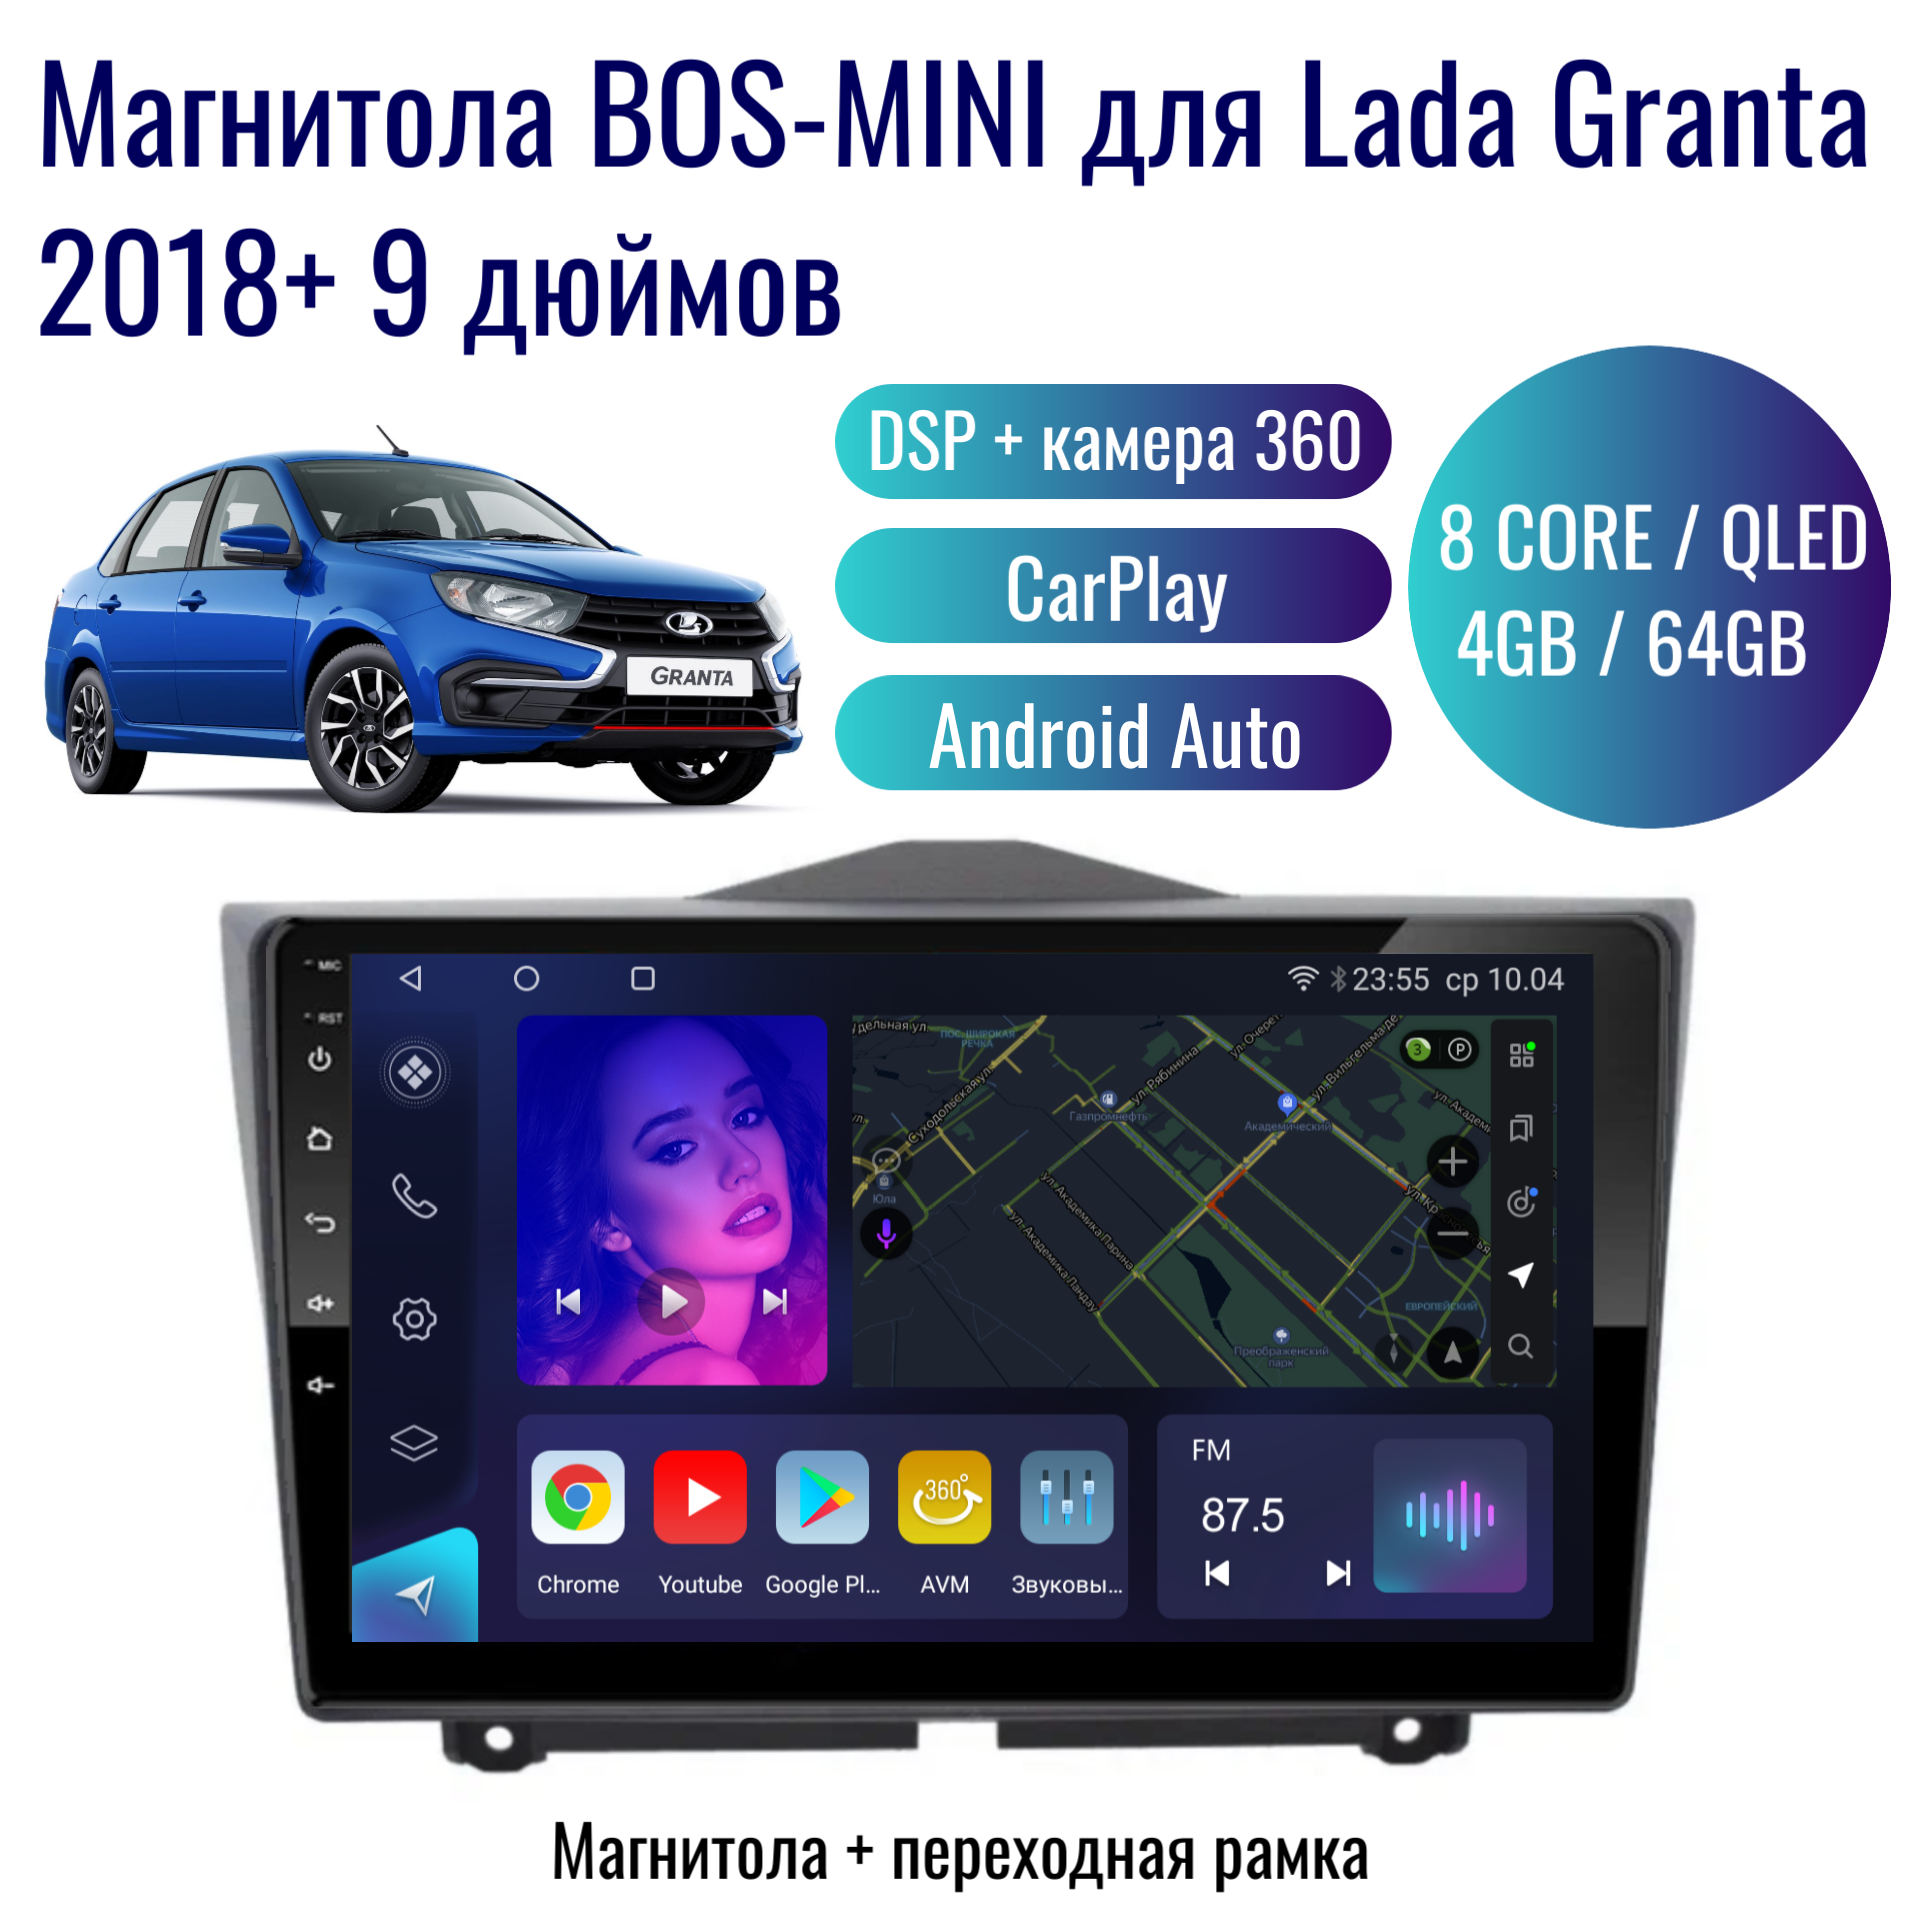 Автомагнитола BOS-MINI Android Lada Granta 2018+ / 8 ядер 4Gb+64Gb / 9 дюймов / GPS / Bluetooth / Wi-Fi / 2din / навигатор / CarPlay / Android Auto